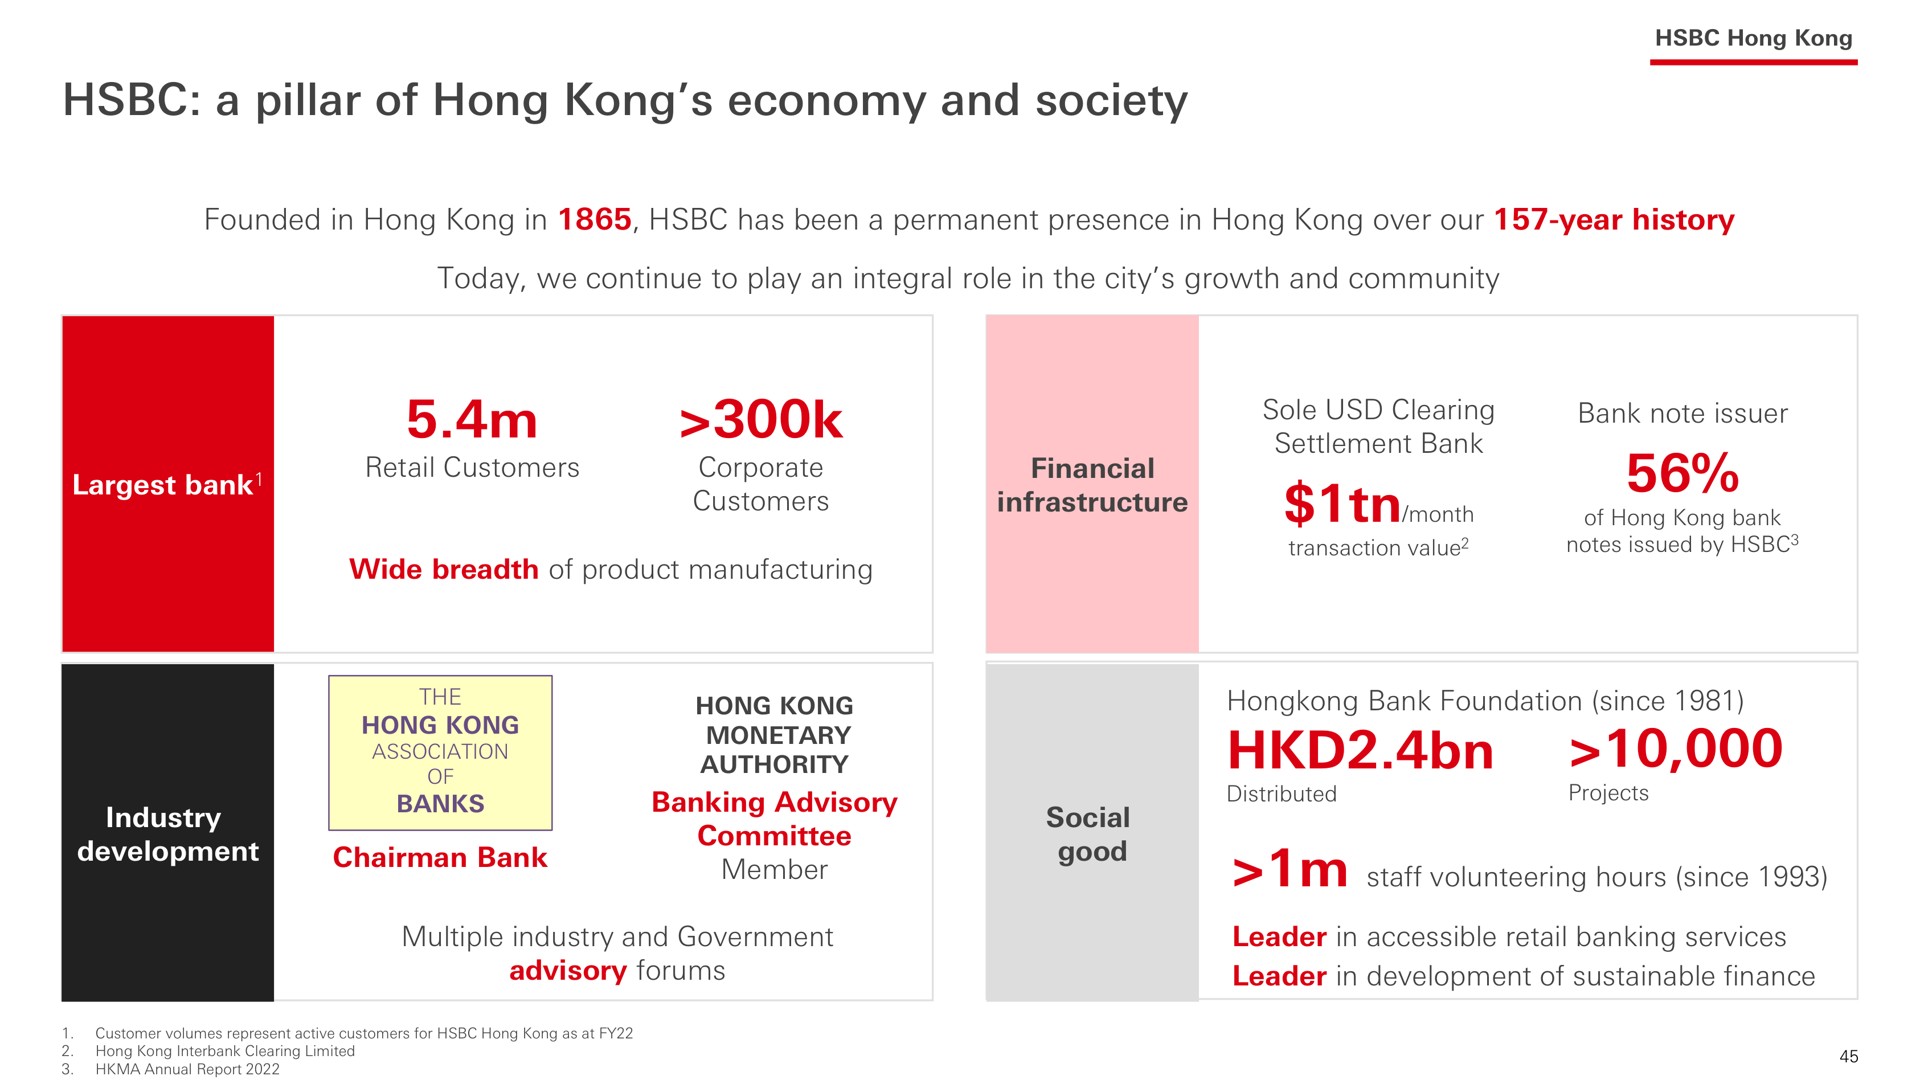 a pillar of hong economy and society | HSBC